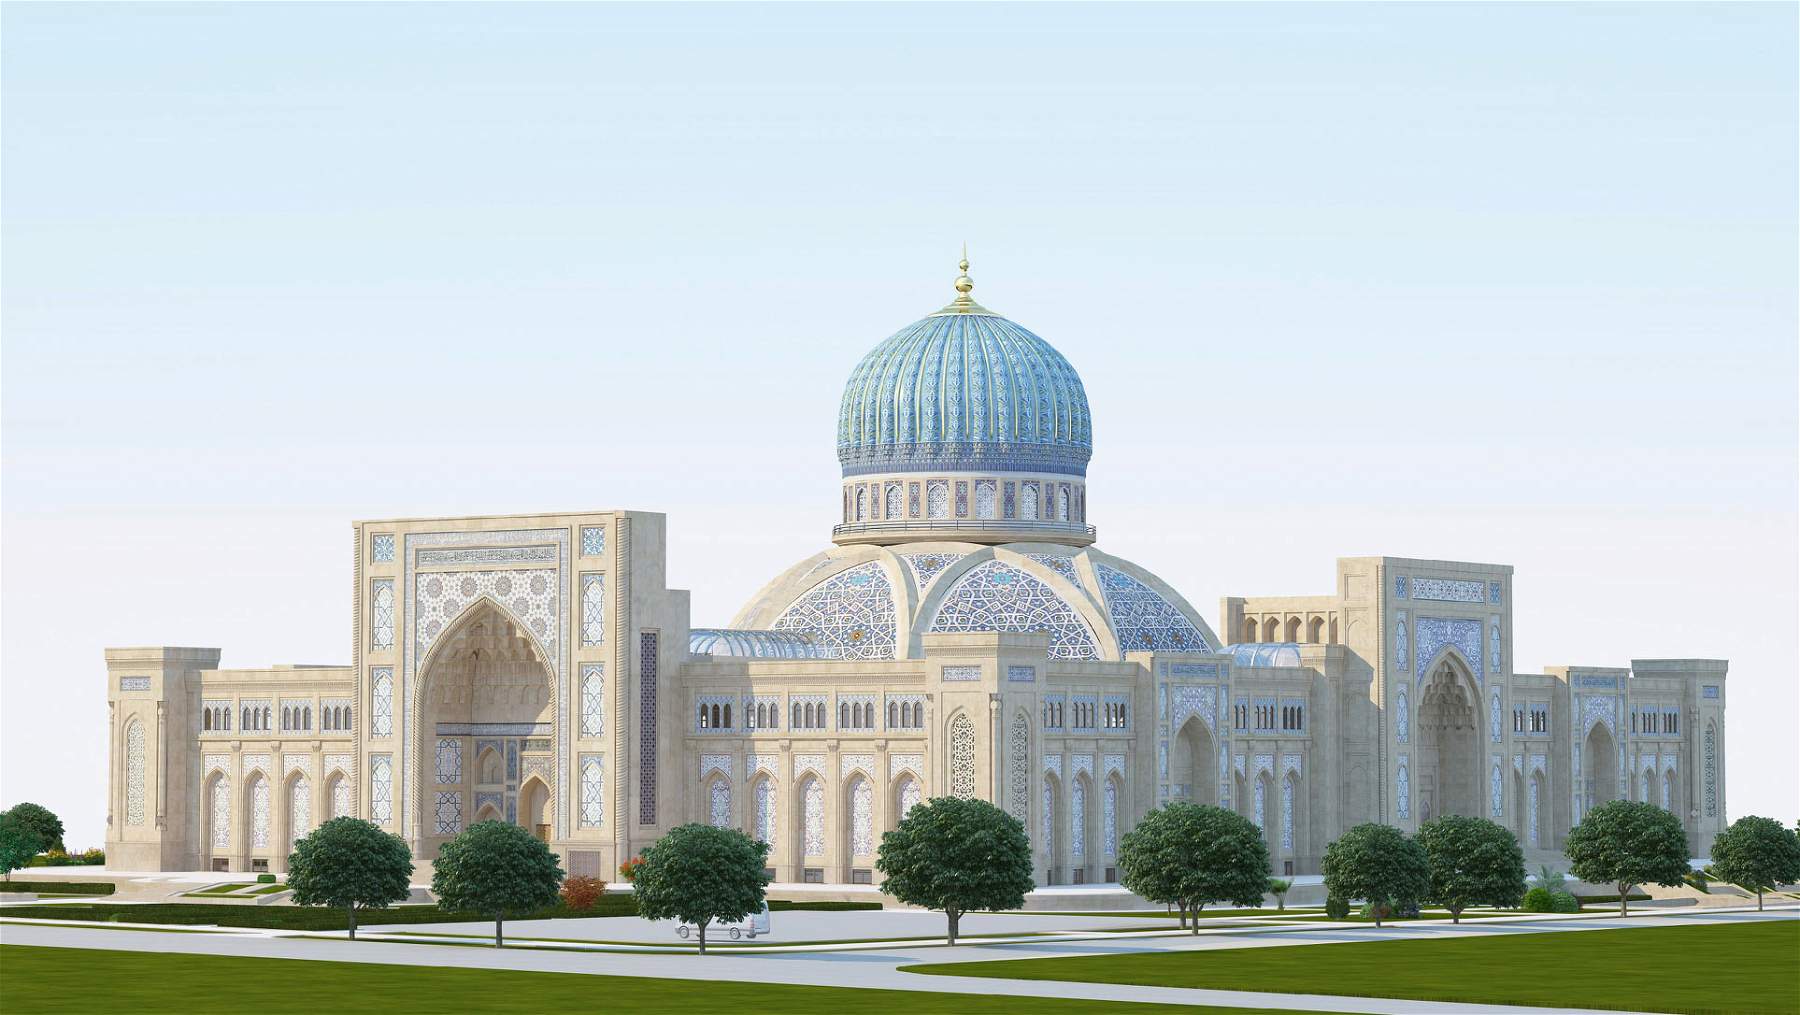 Uzbekistan, an Italian company made mosaics for the new Center for Islamic Civilization